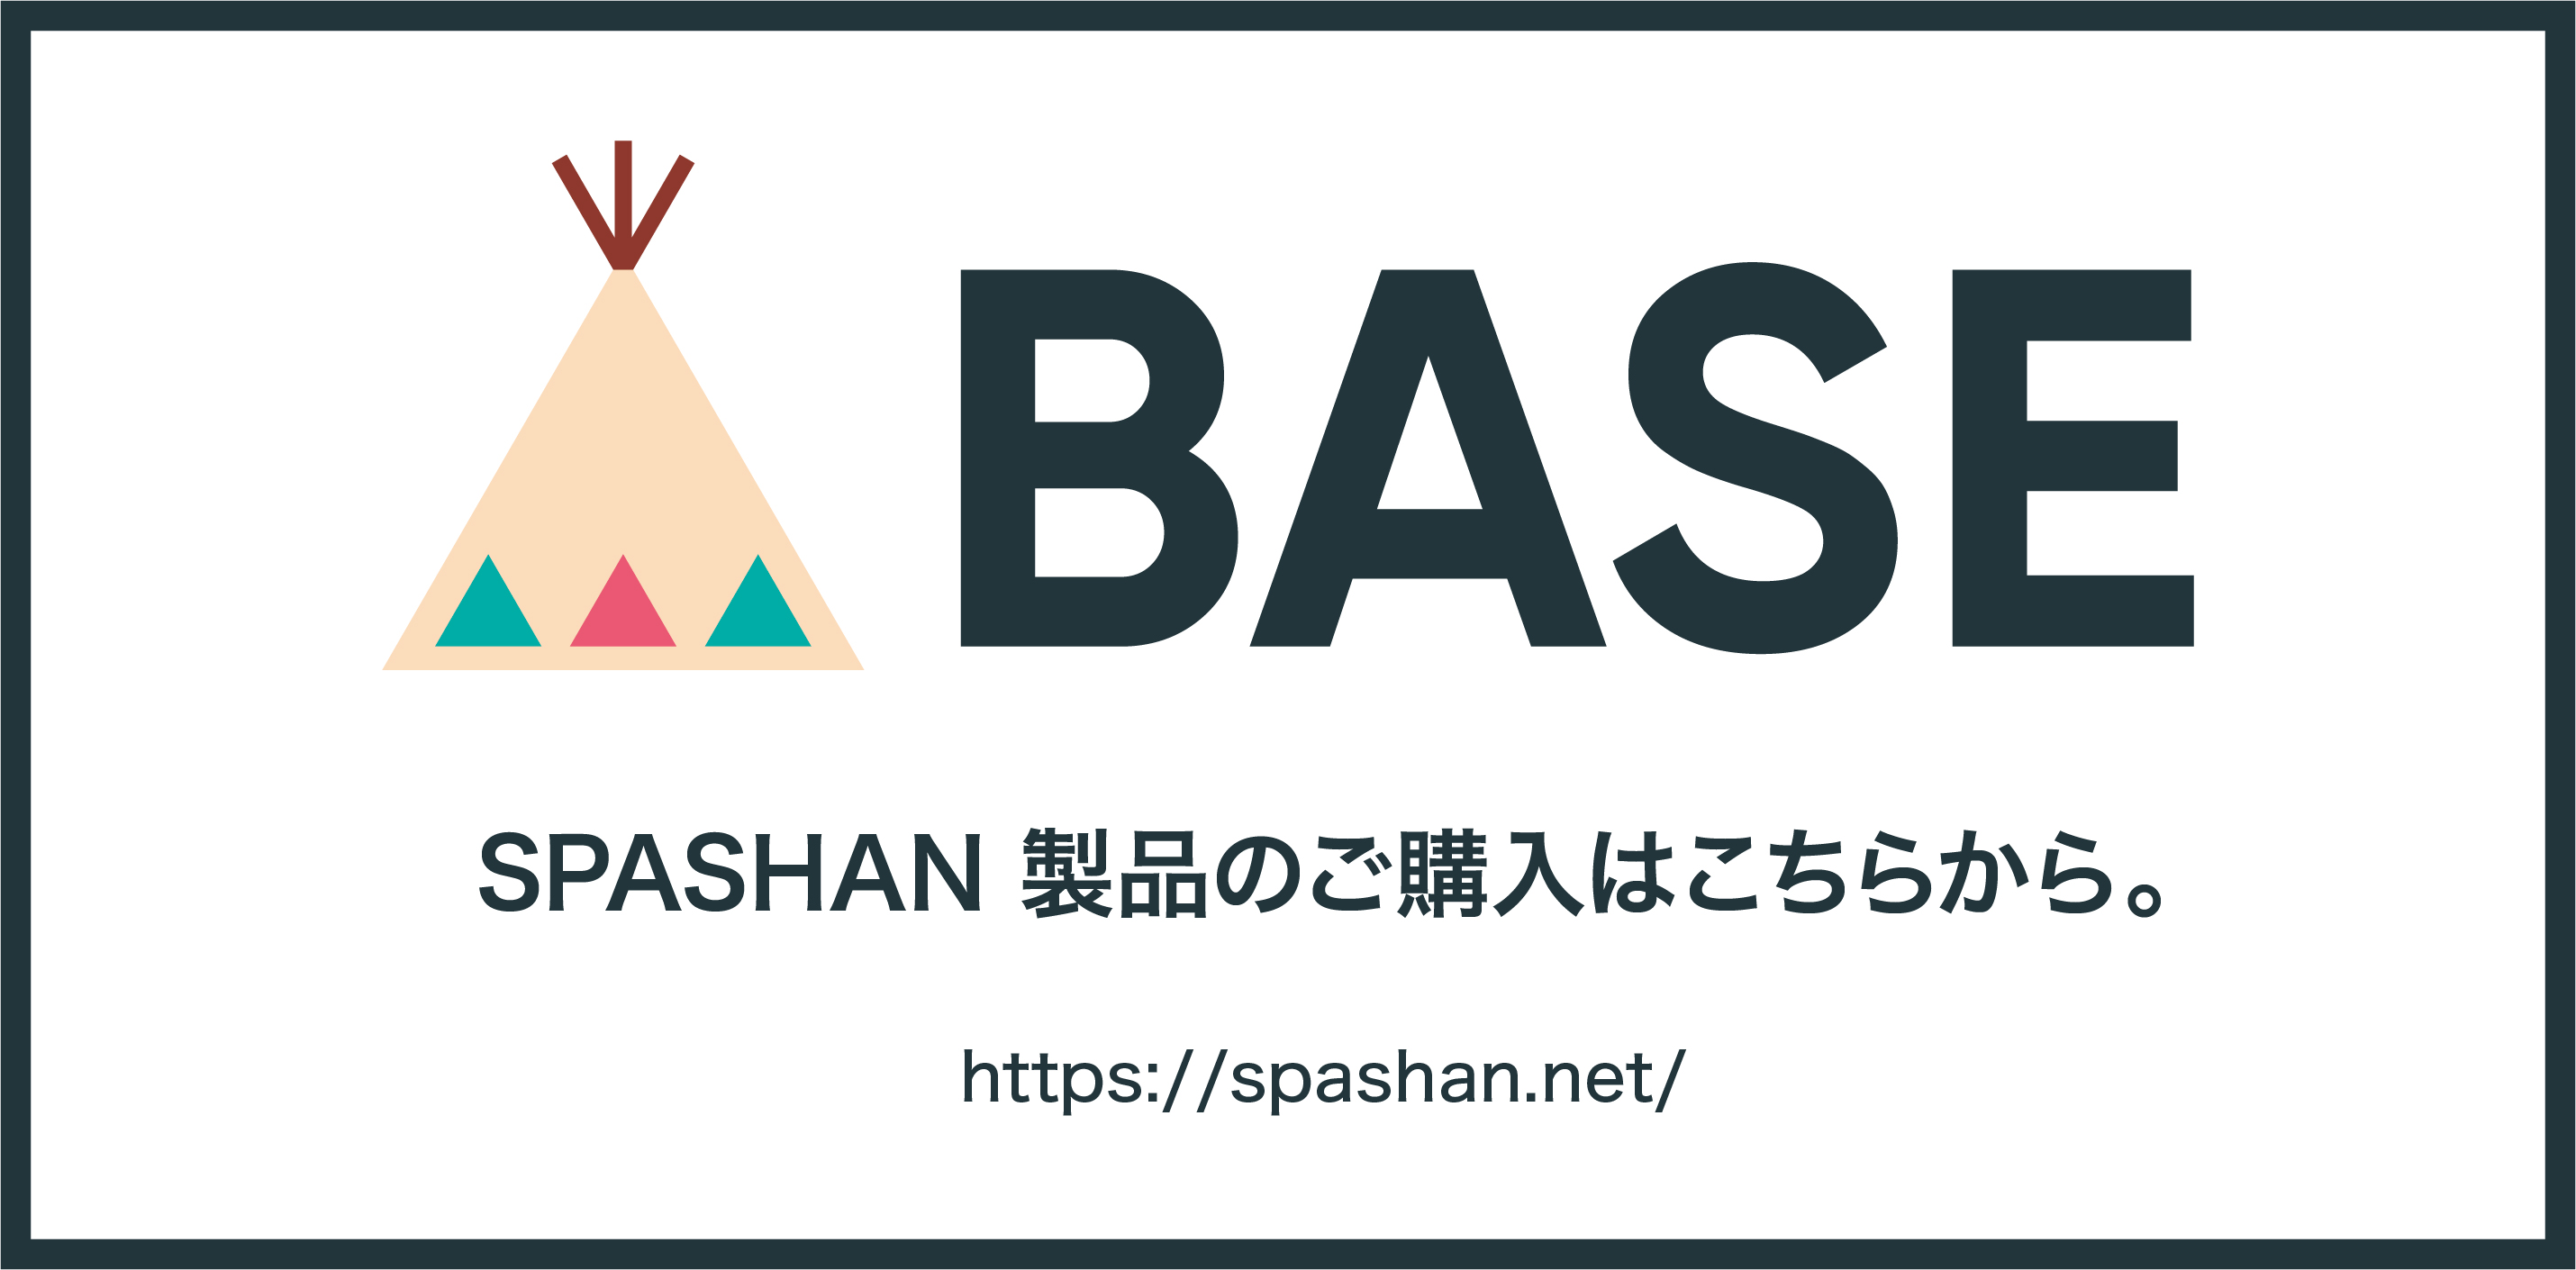 SPASHAN BASE Official